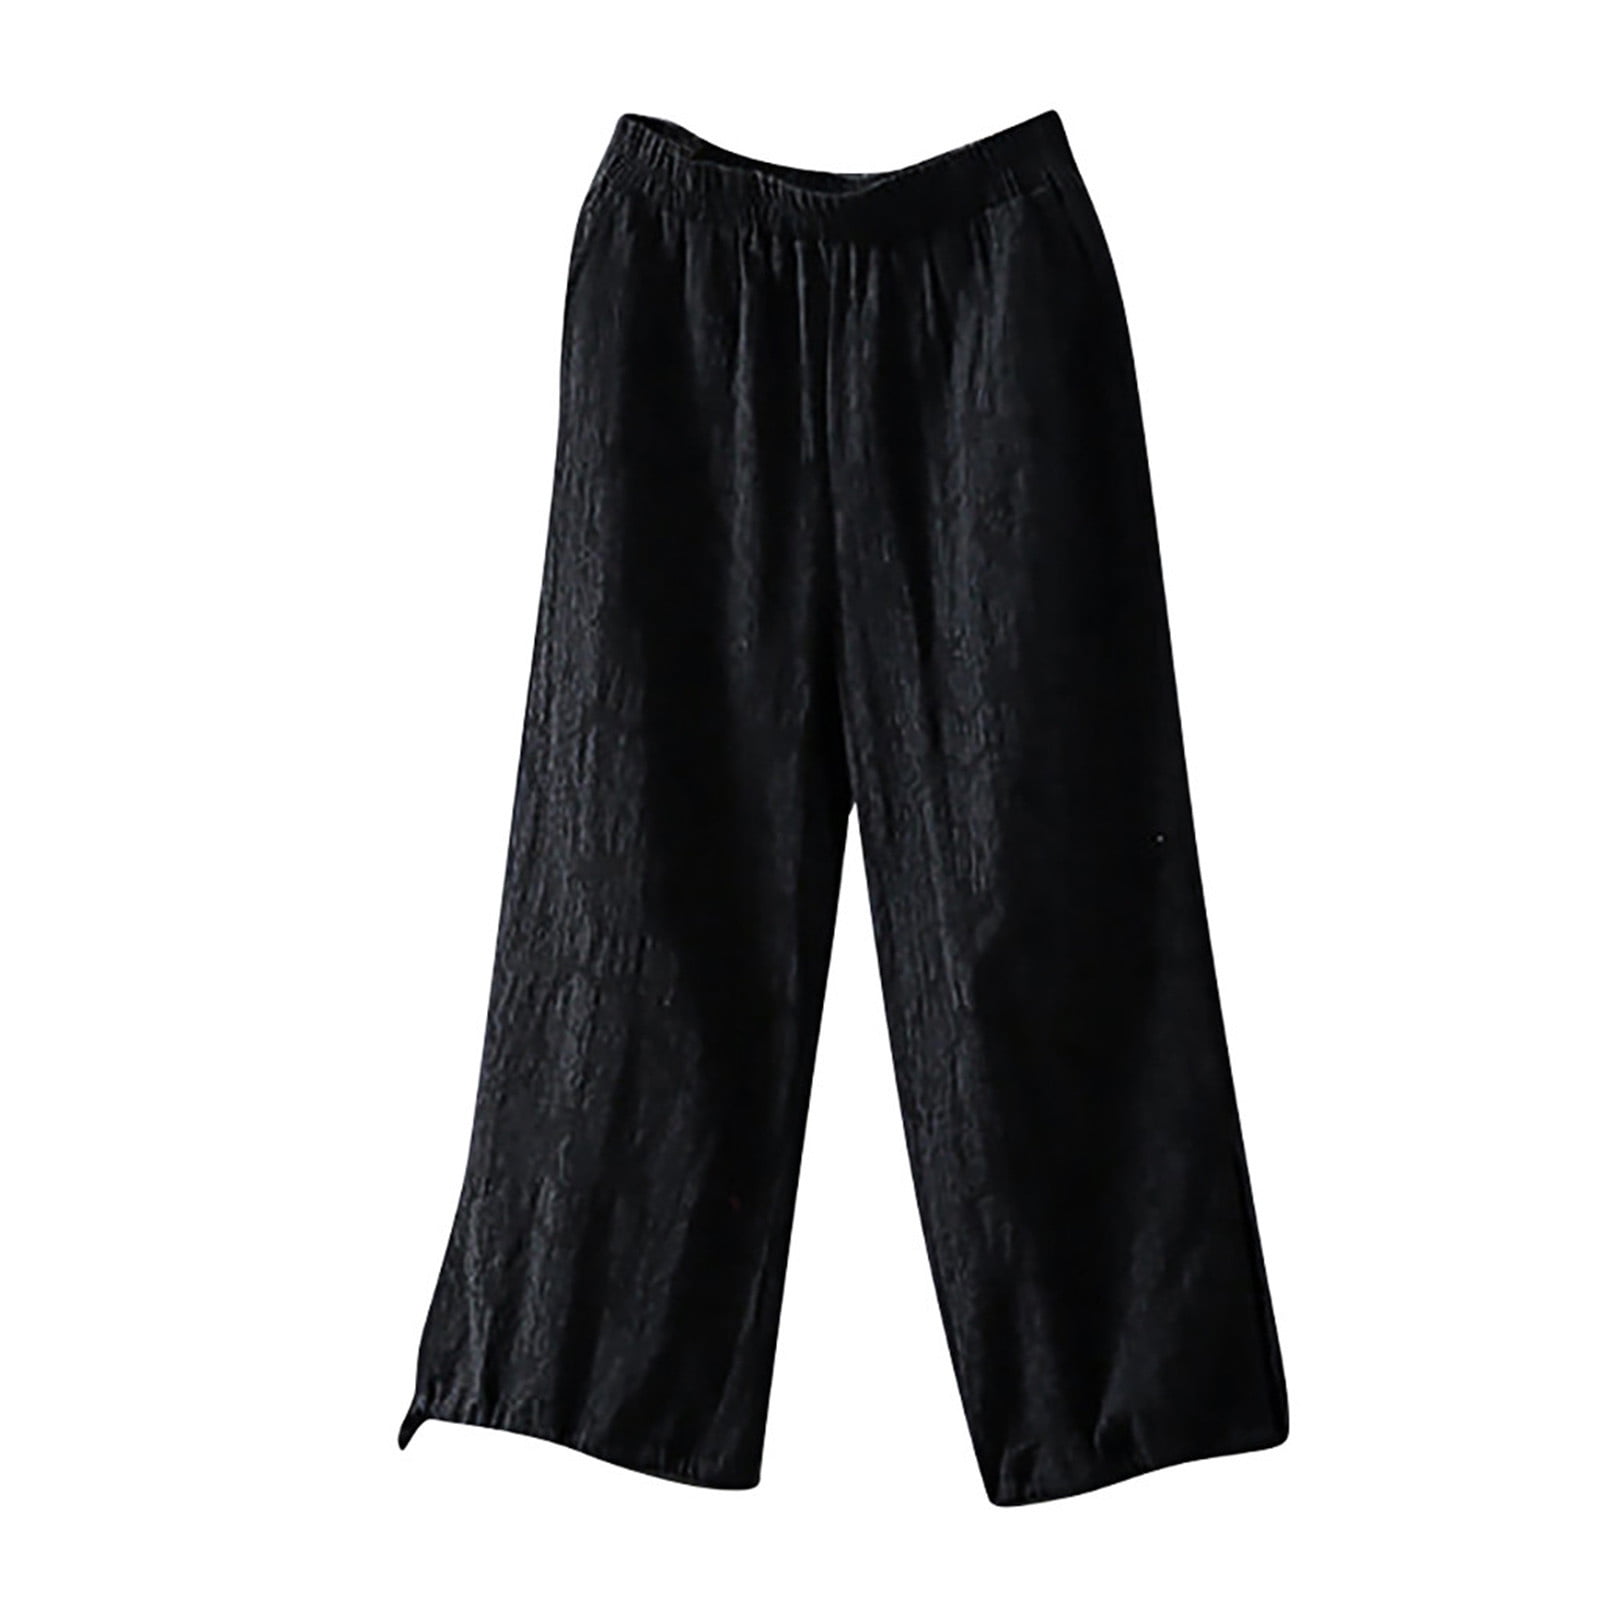 Fashion (Black)Women's Cotton Capri Summer Pants Casual Loose Harem Pants  For Women Knee Length Breeches Women Pants Capris Female Sweatpants WEF @  Best Price Online